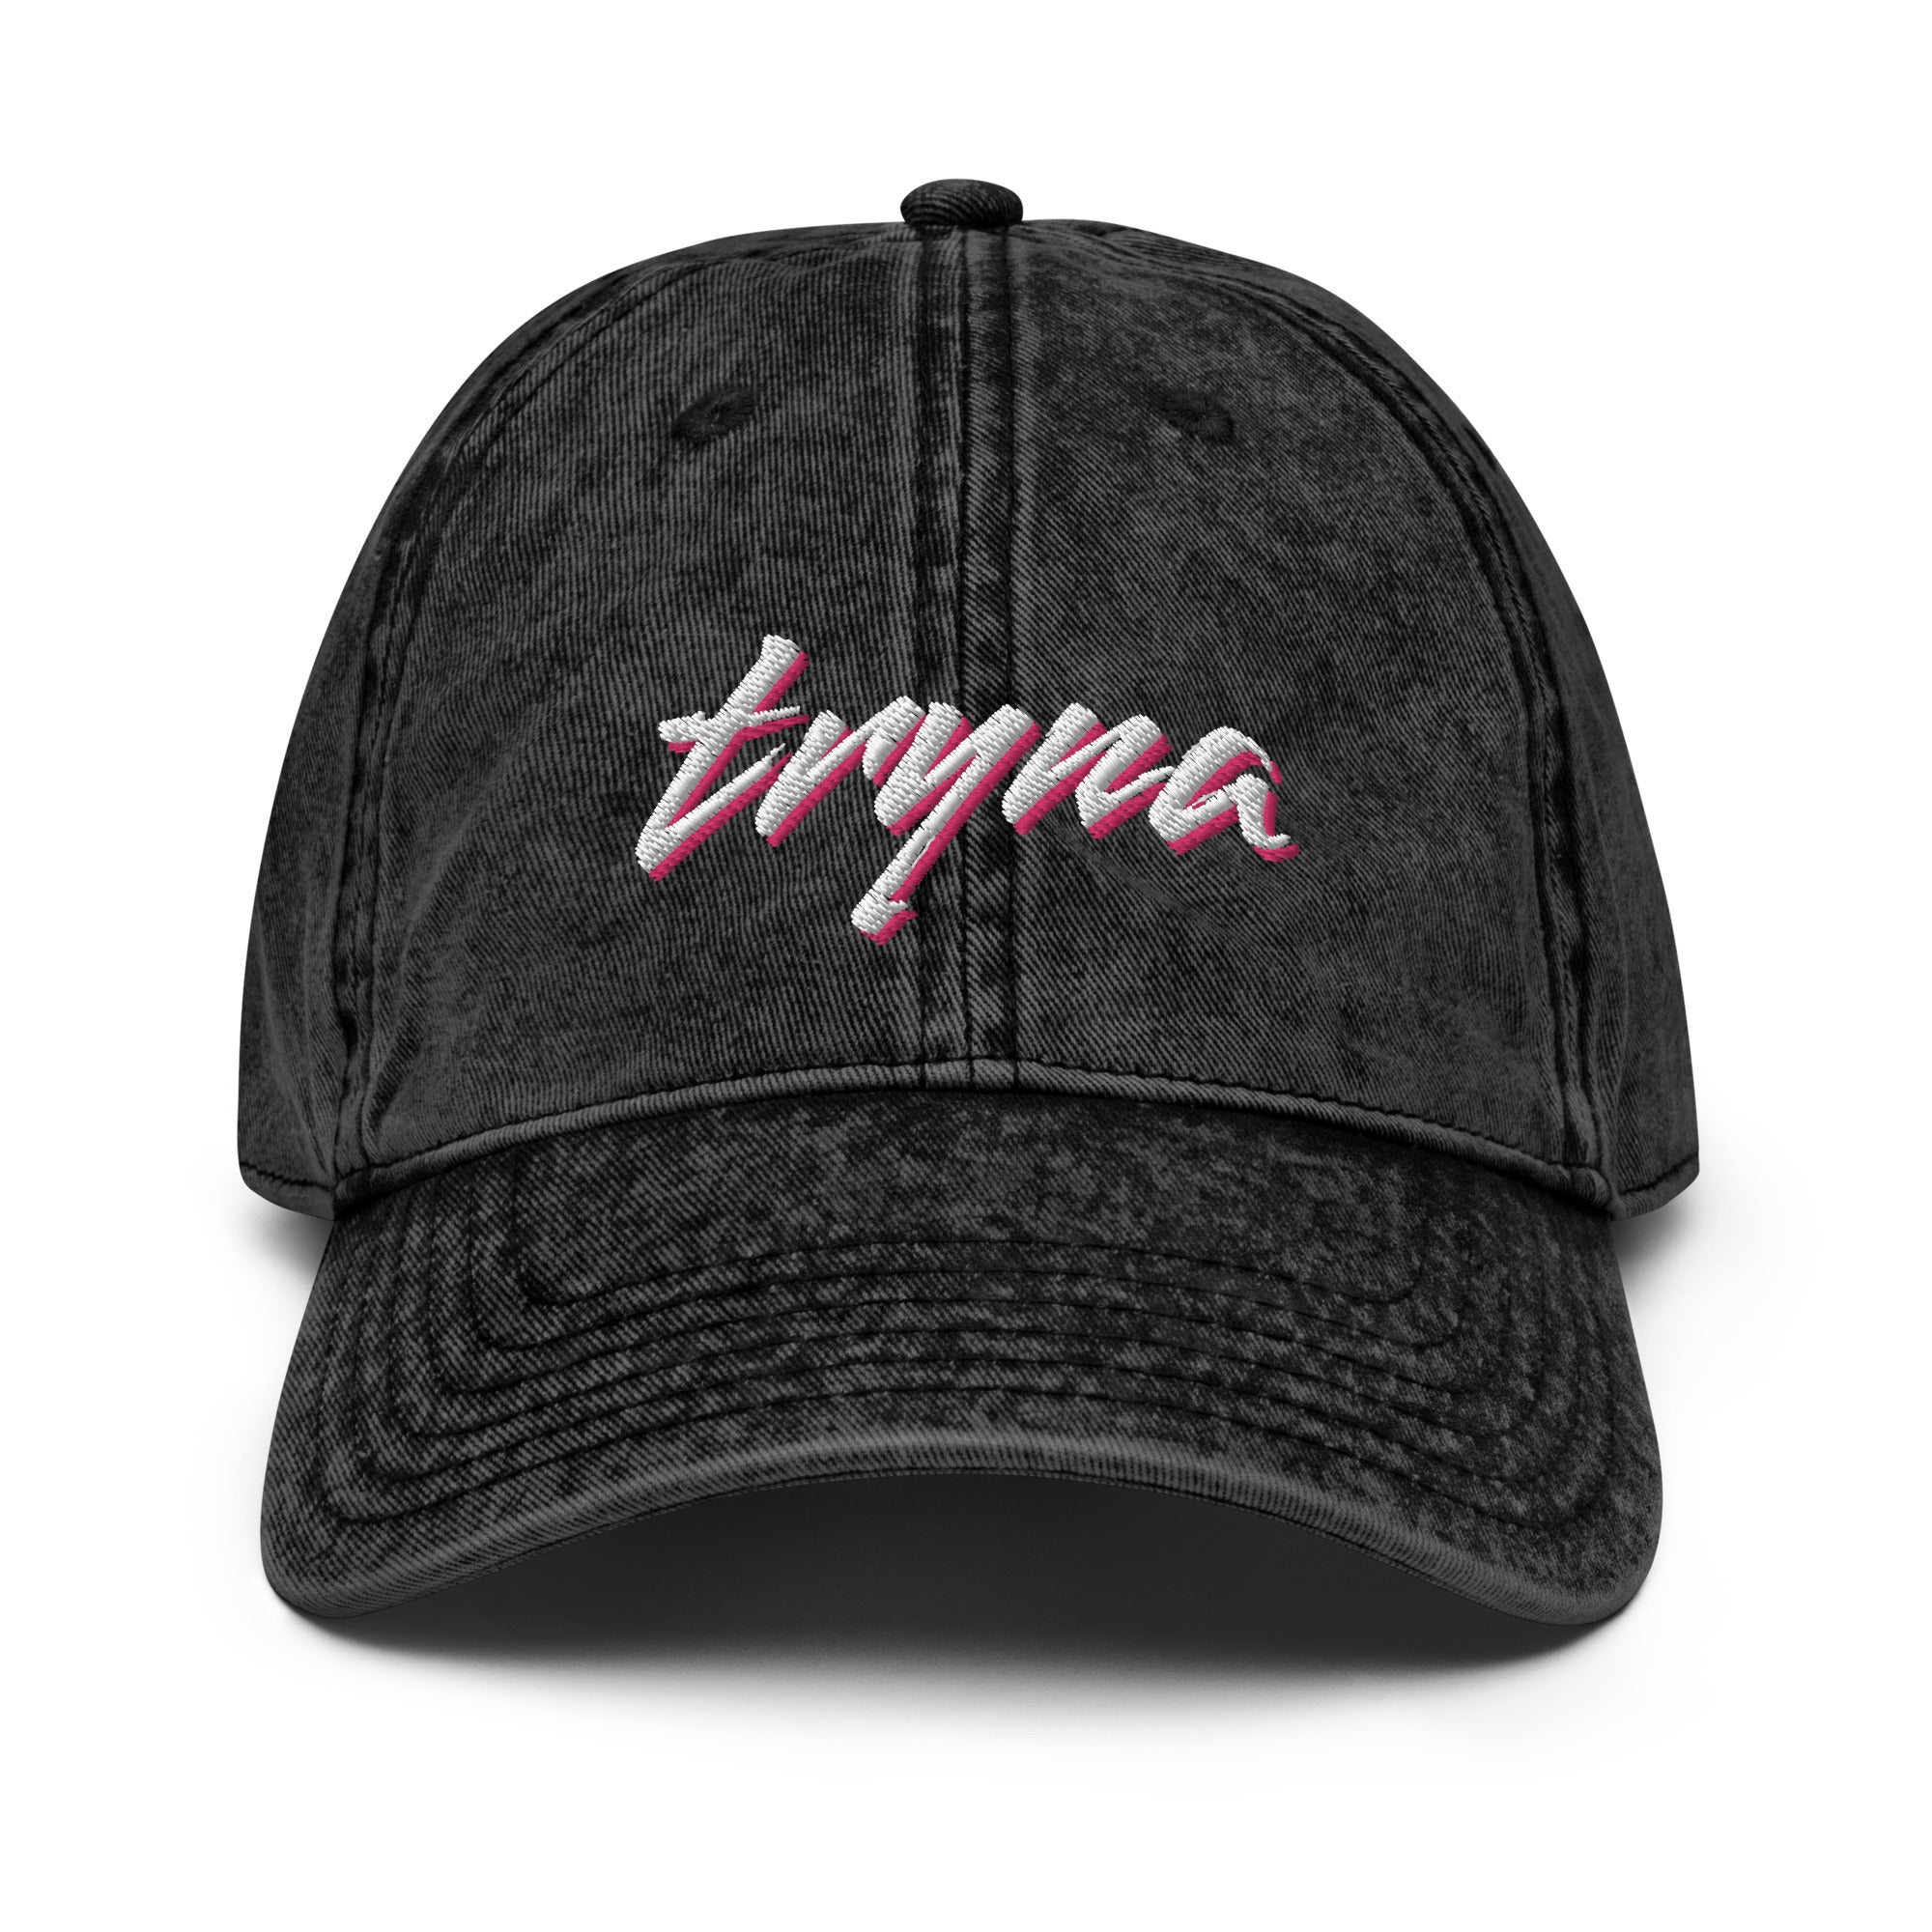 "Tryna" Vintage Twill Dad Hat - San Francisco Slang